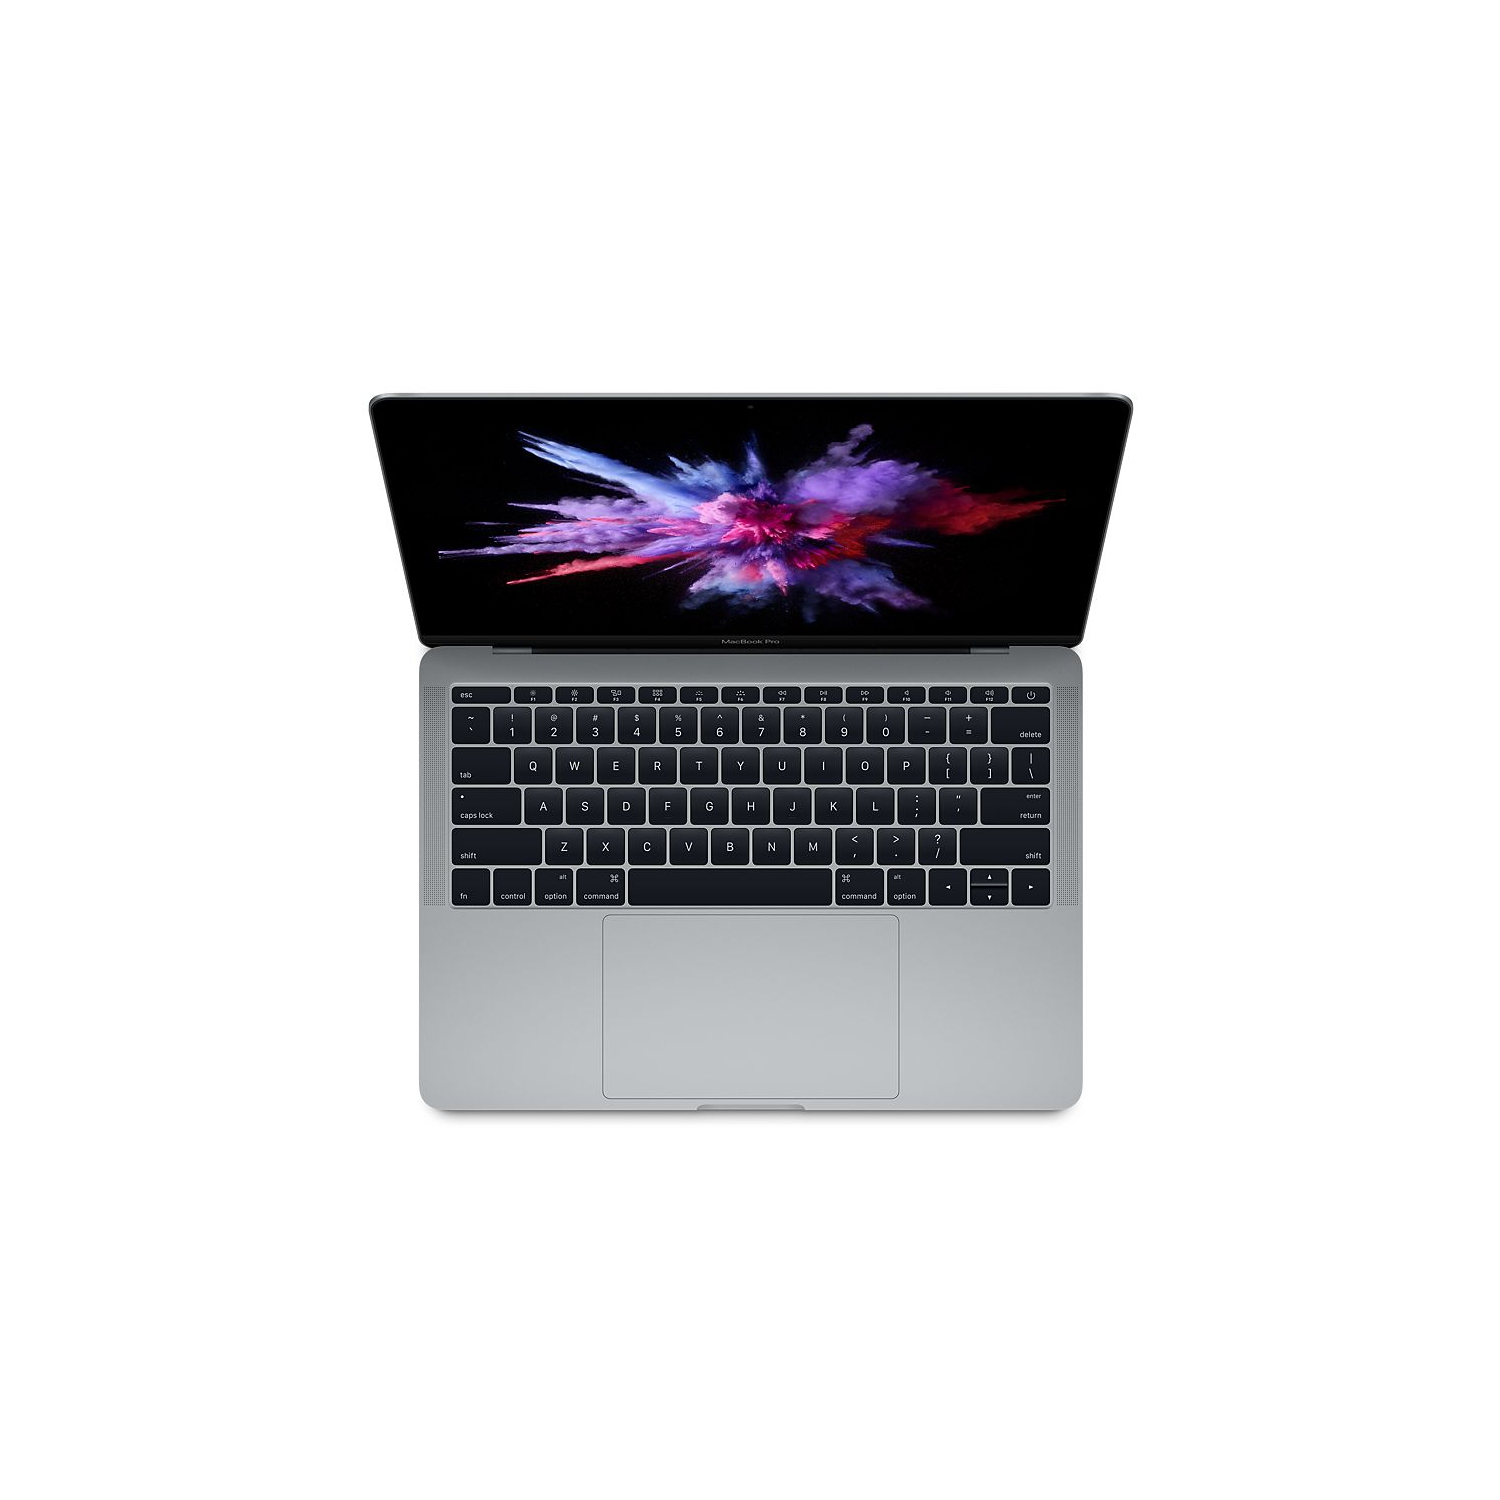 Refurbished (Excellent) - Apple MacBook Pro 13" Retina 2.3GHz Intel Core i5 / 8GB RAM / 256GB - Space Gray - 2017 Model Grade A, Excellent, 9/10!